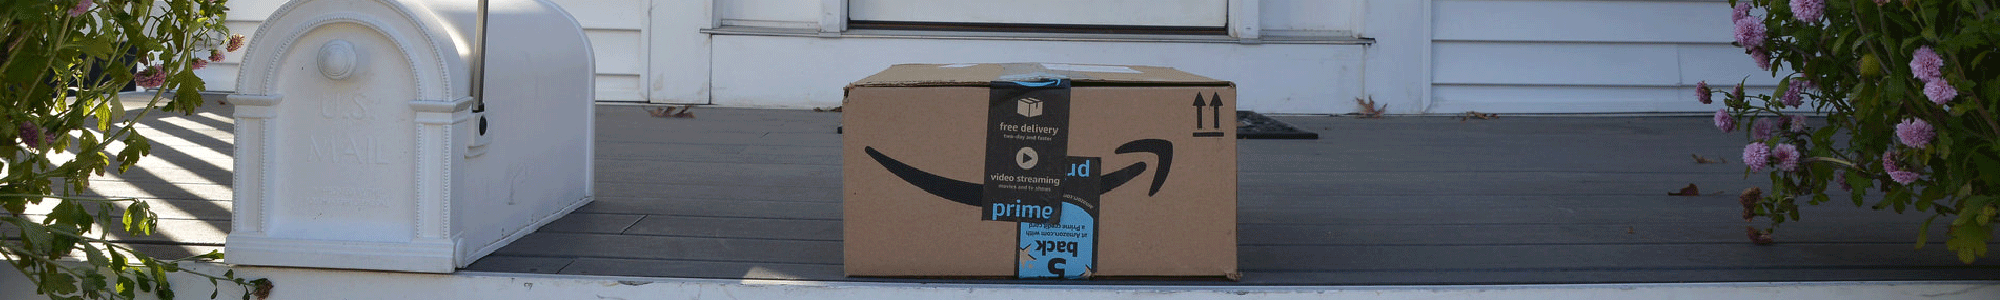 Amazon Prime Day banner image